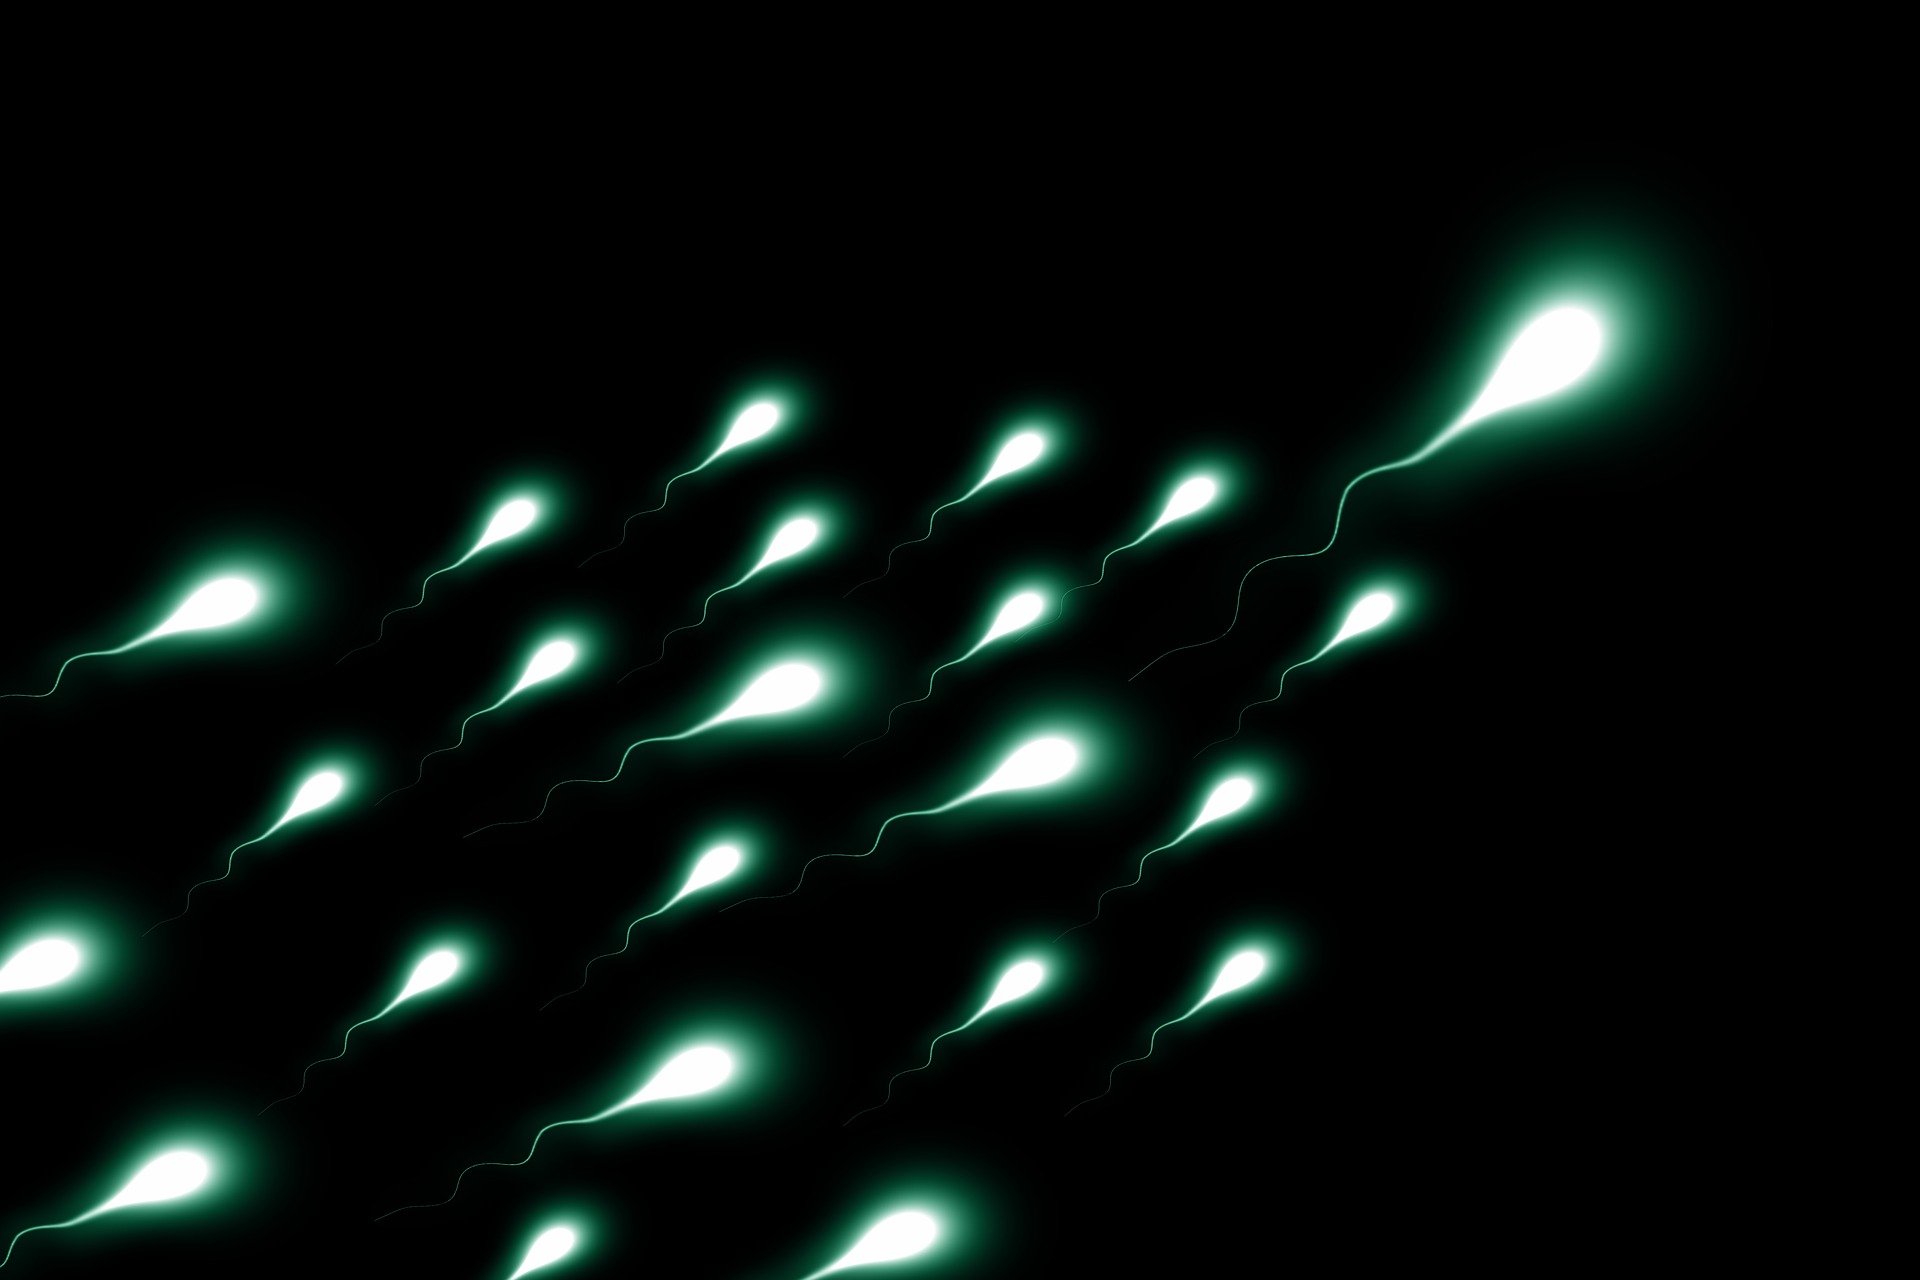 Sperm moving together; background is dark